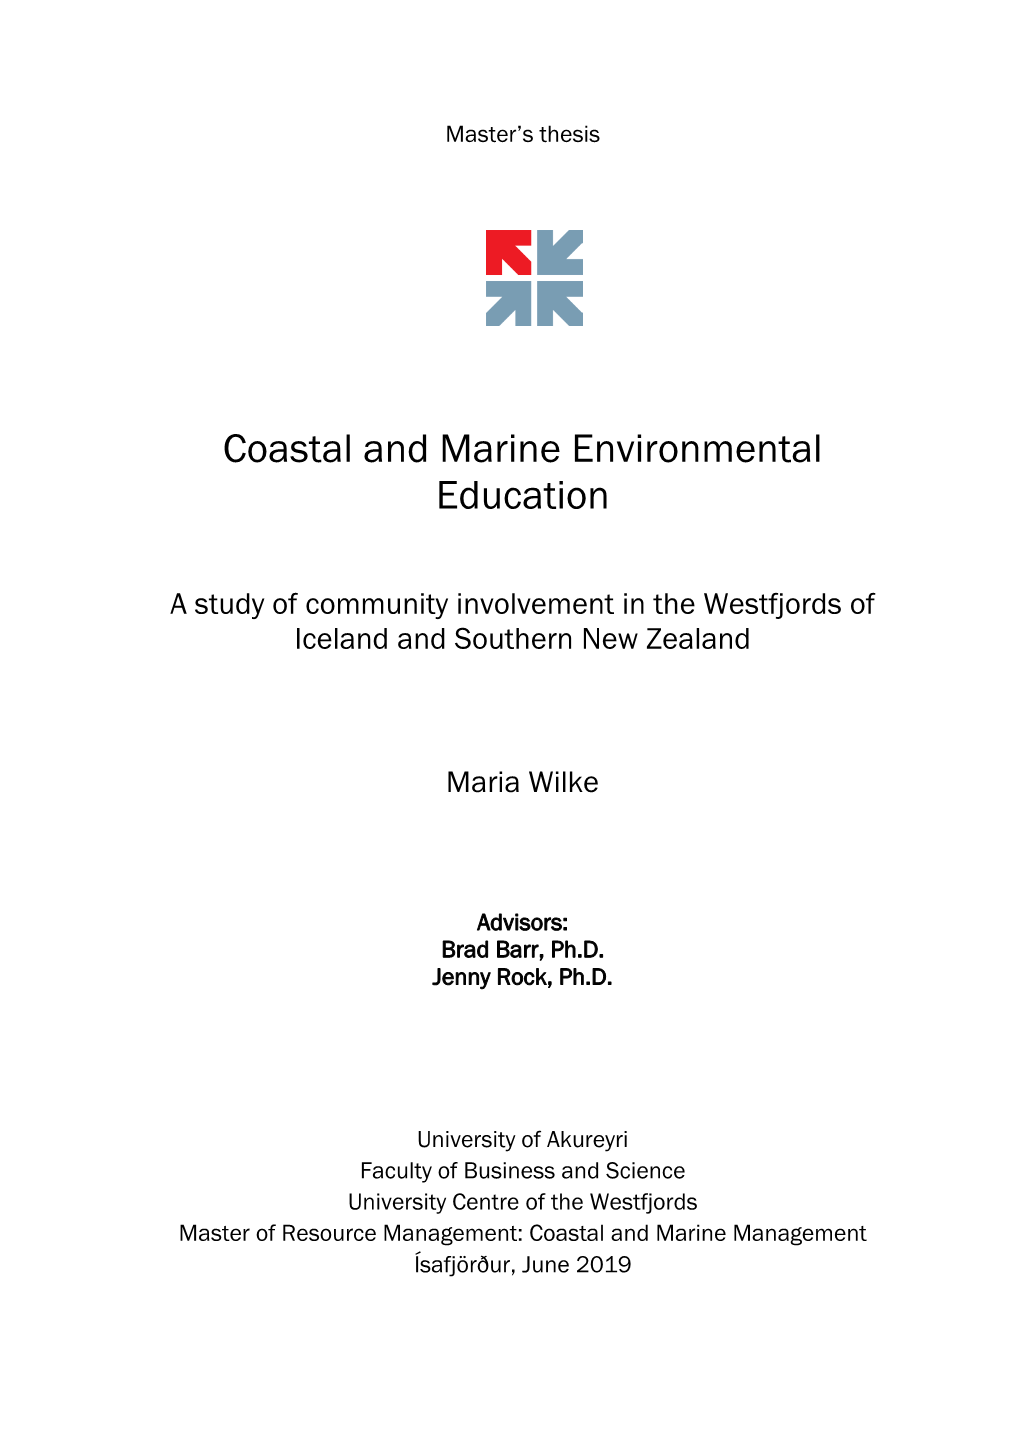 Coastal and Marine Environmental Education